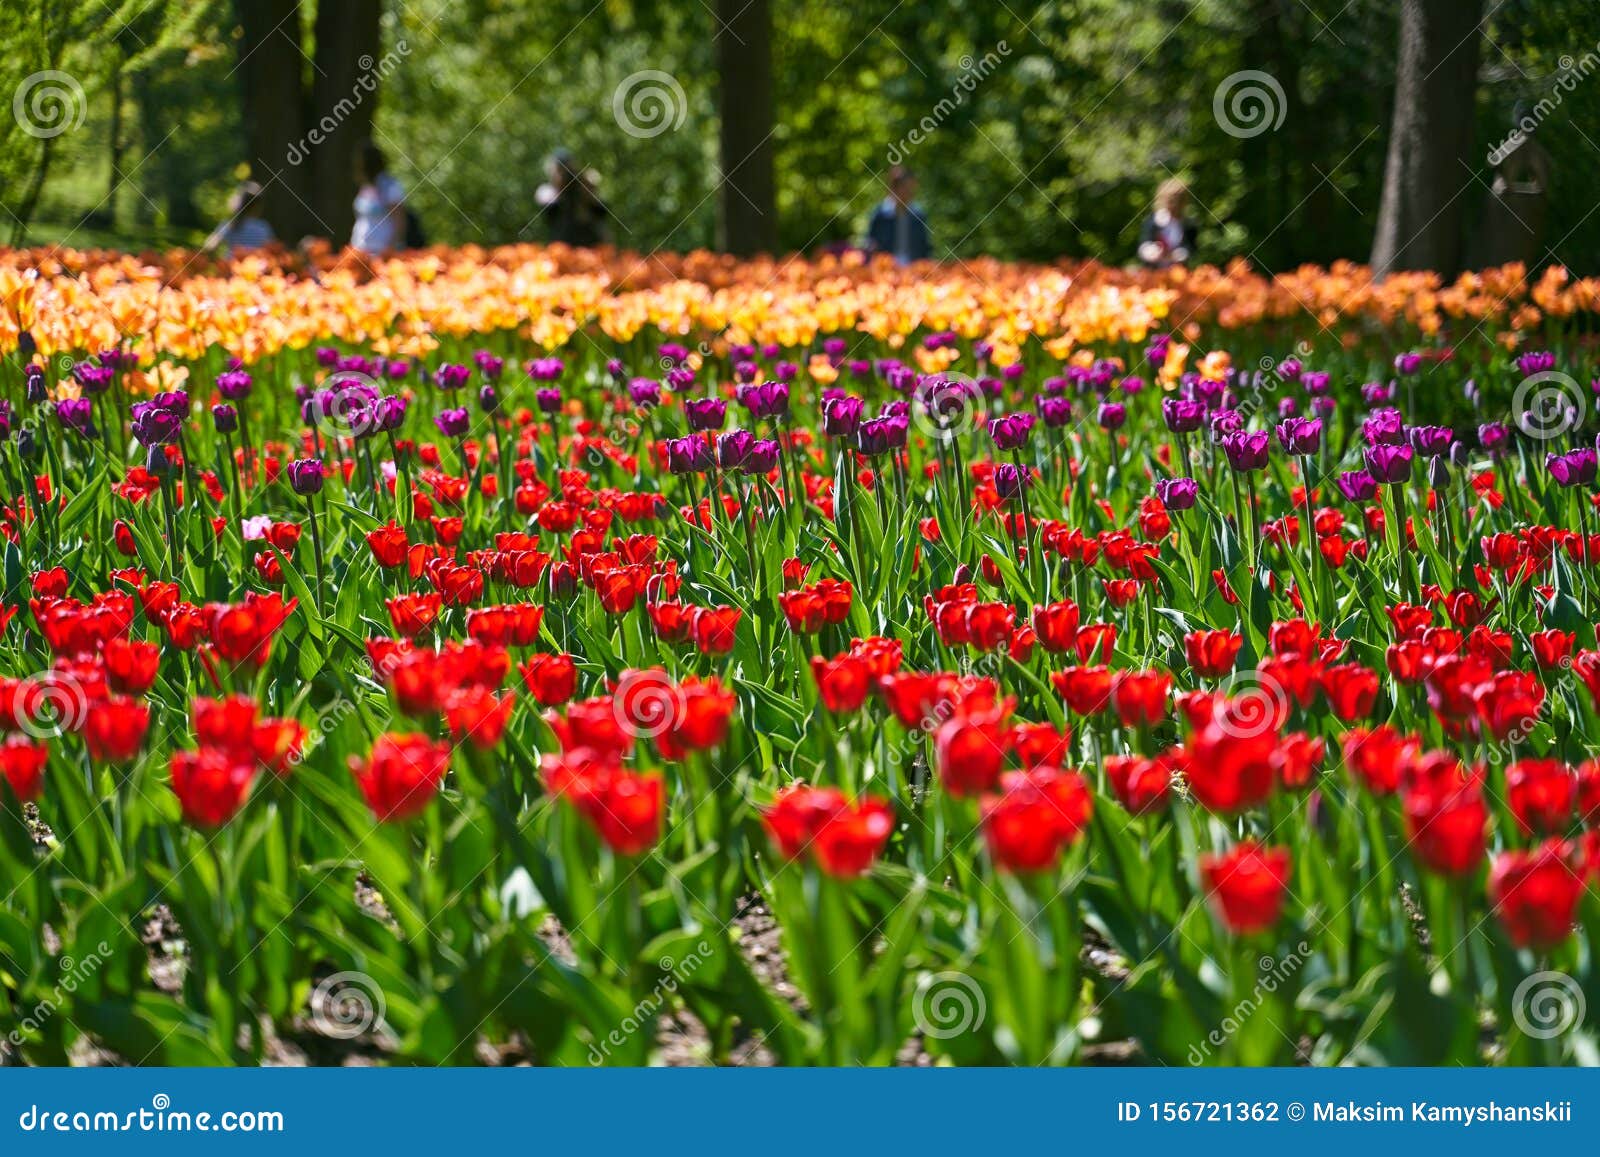 Tulip Festival Illuminated By Sunshine In Park Stock Photo Image Of Blossom Glade 156721362